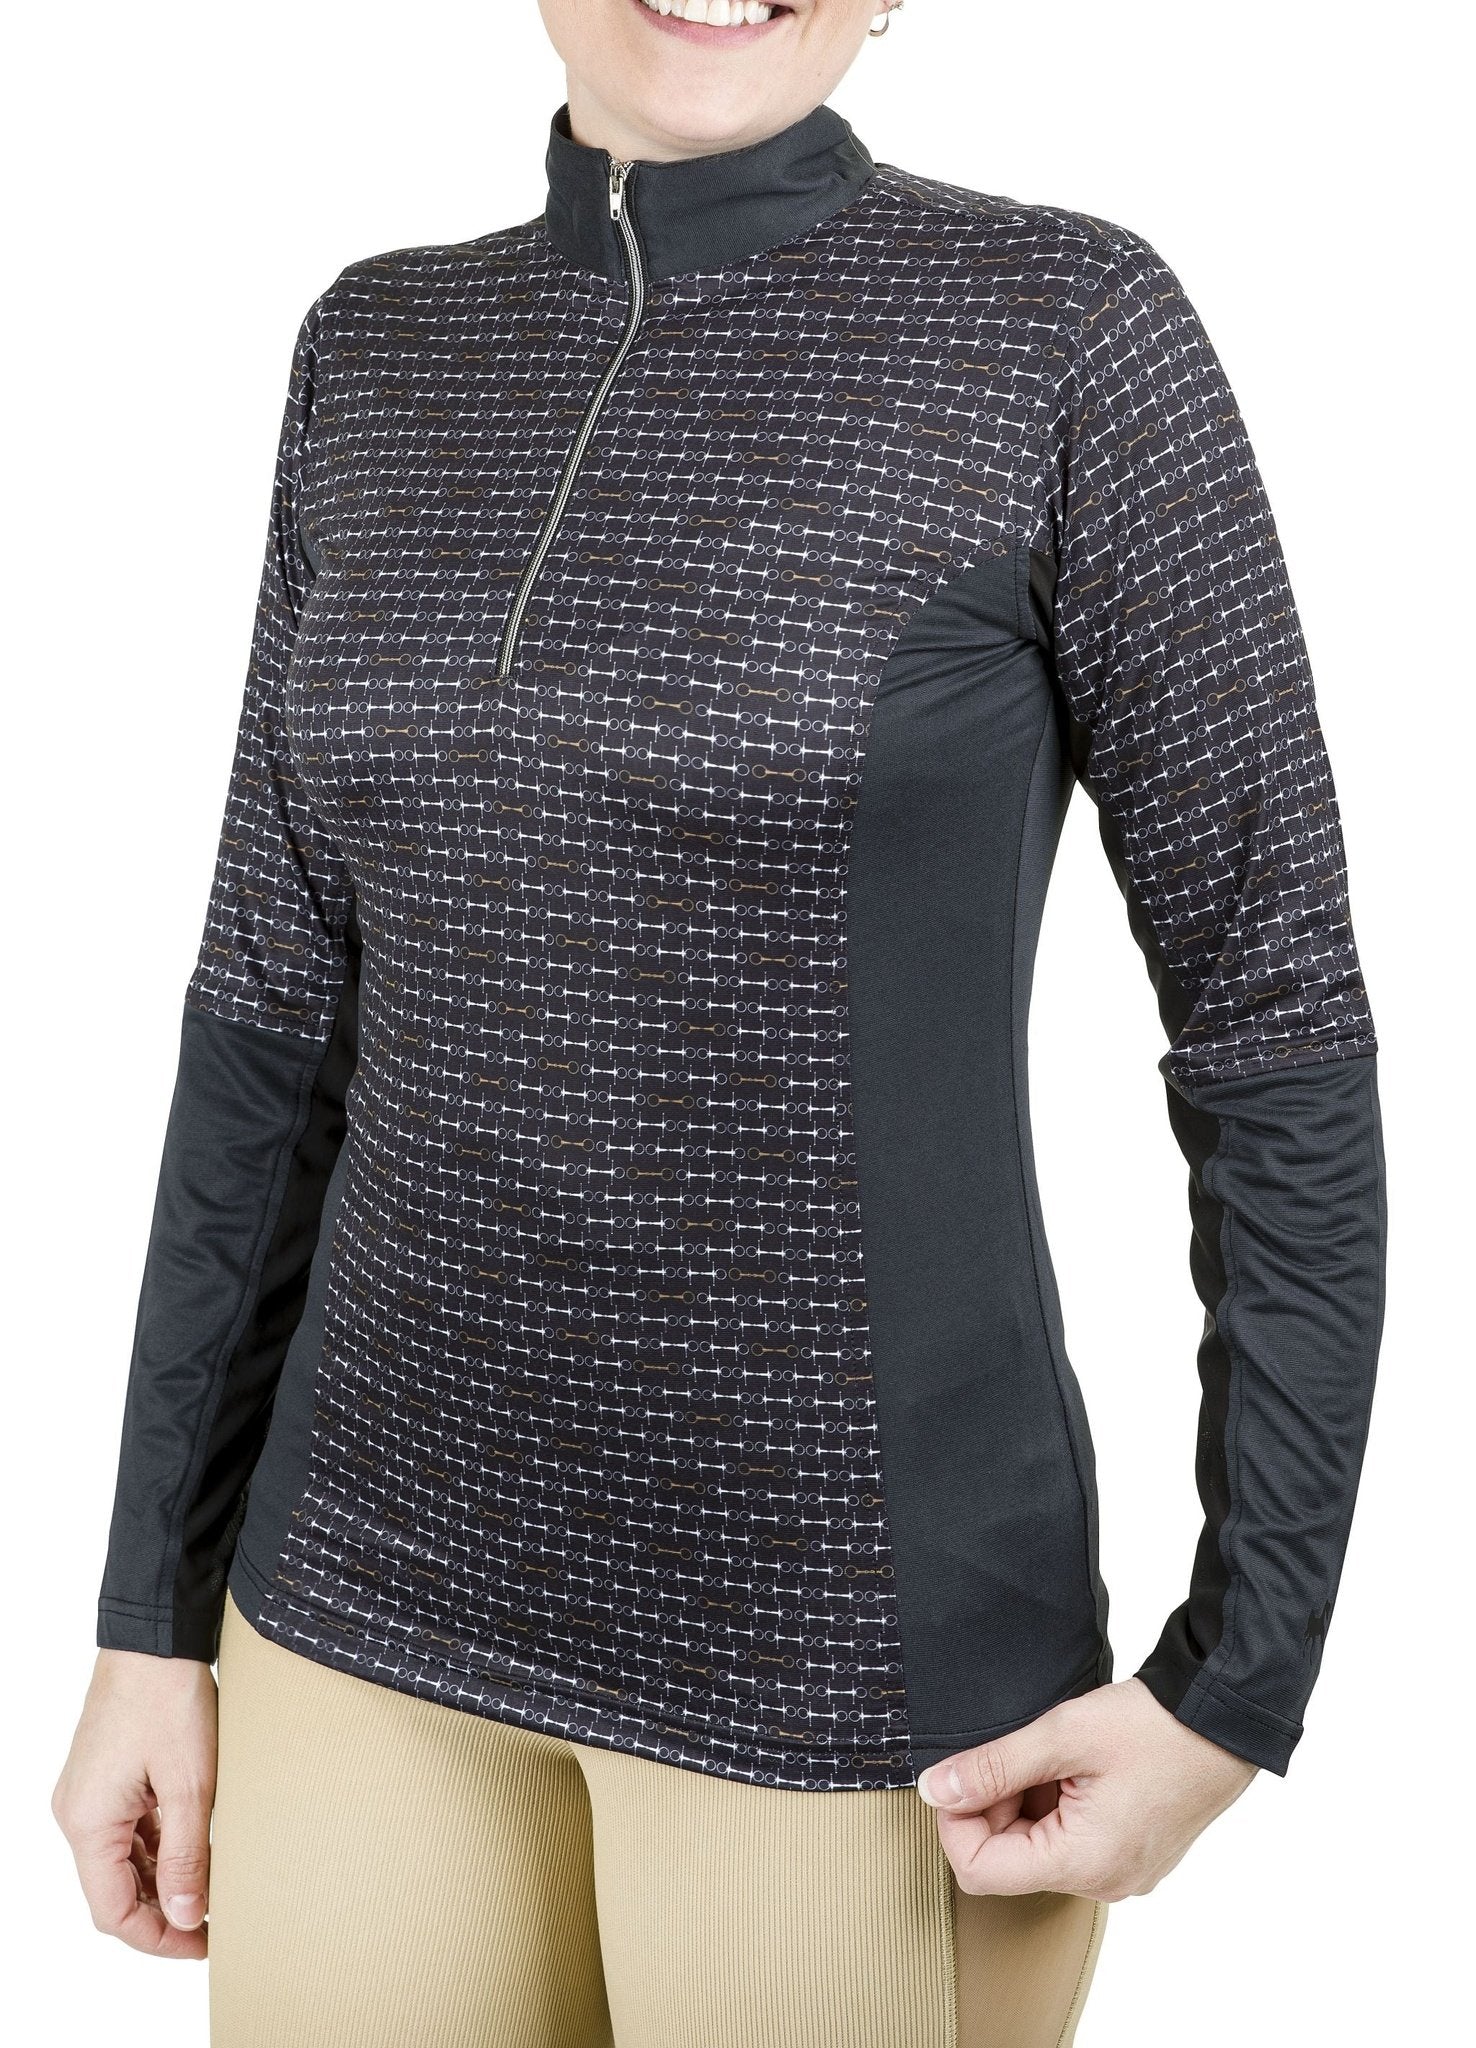 Equine Couture Equicool Snaffle Sport Shirt - Breeches.com